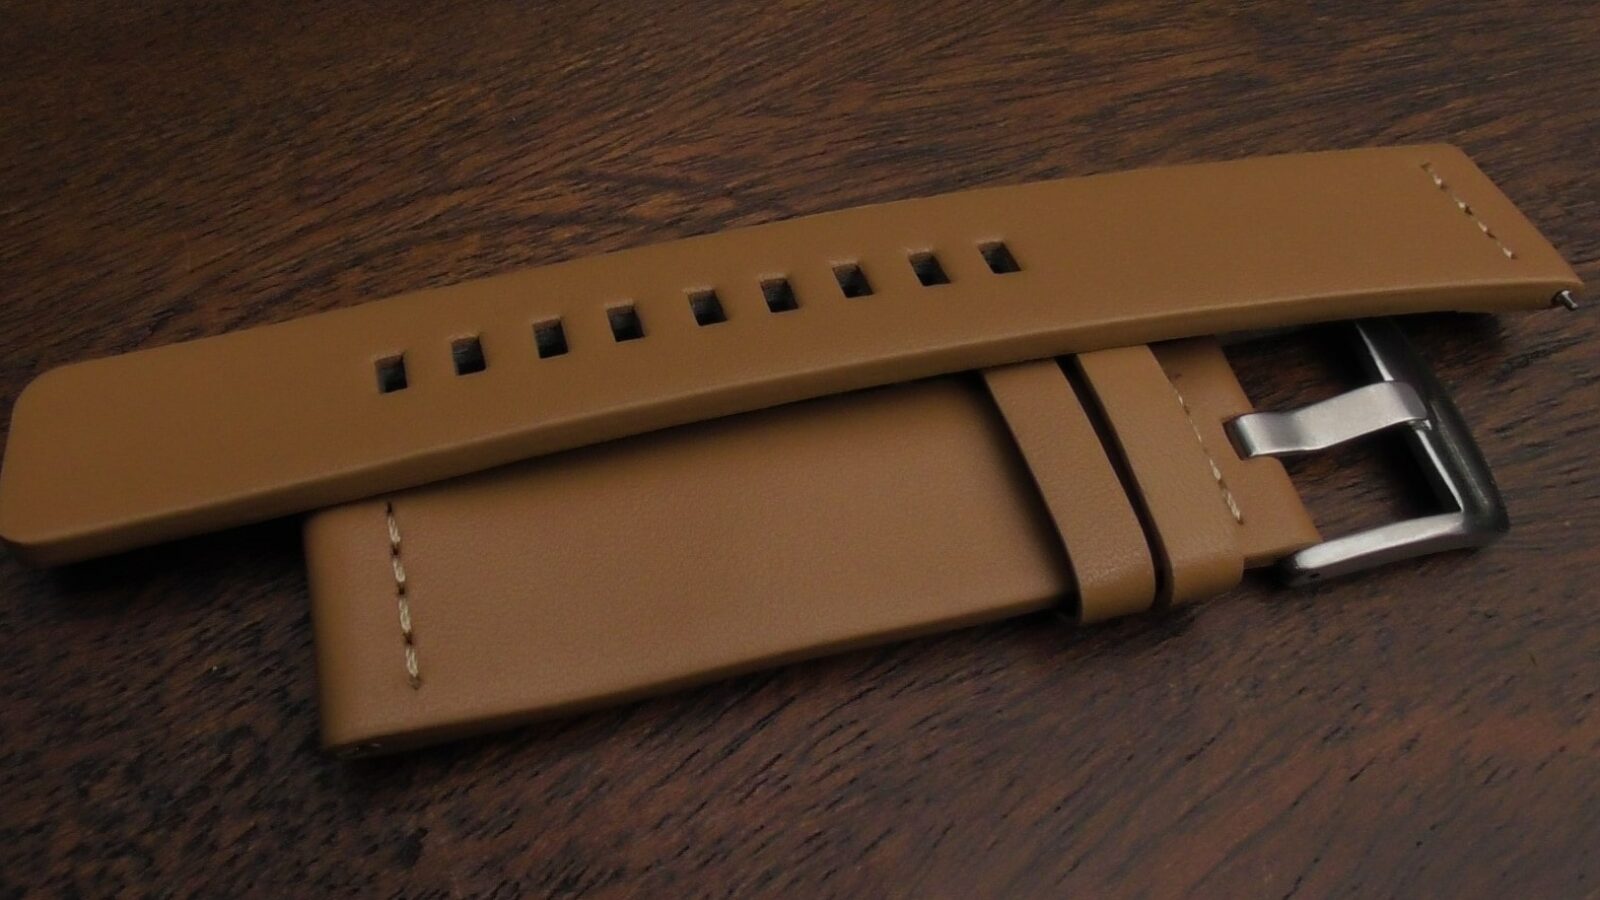 valdora watch straps are flat with no stitching